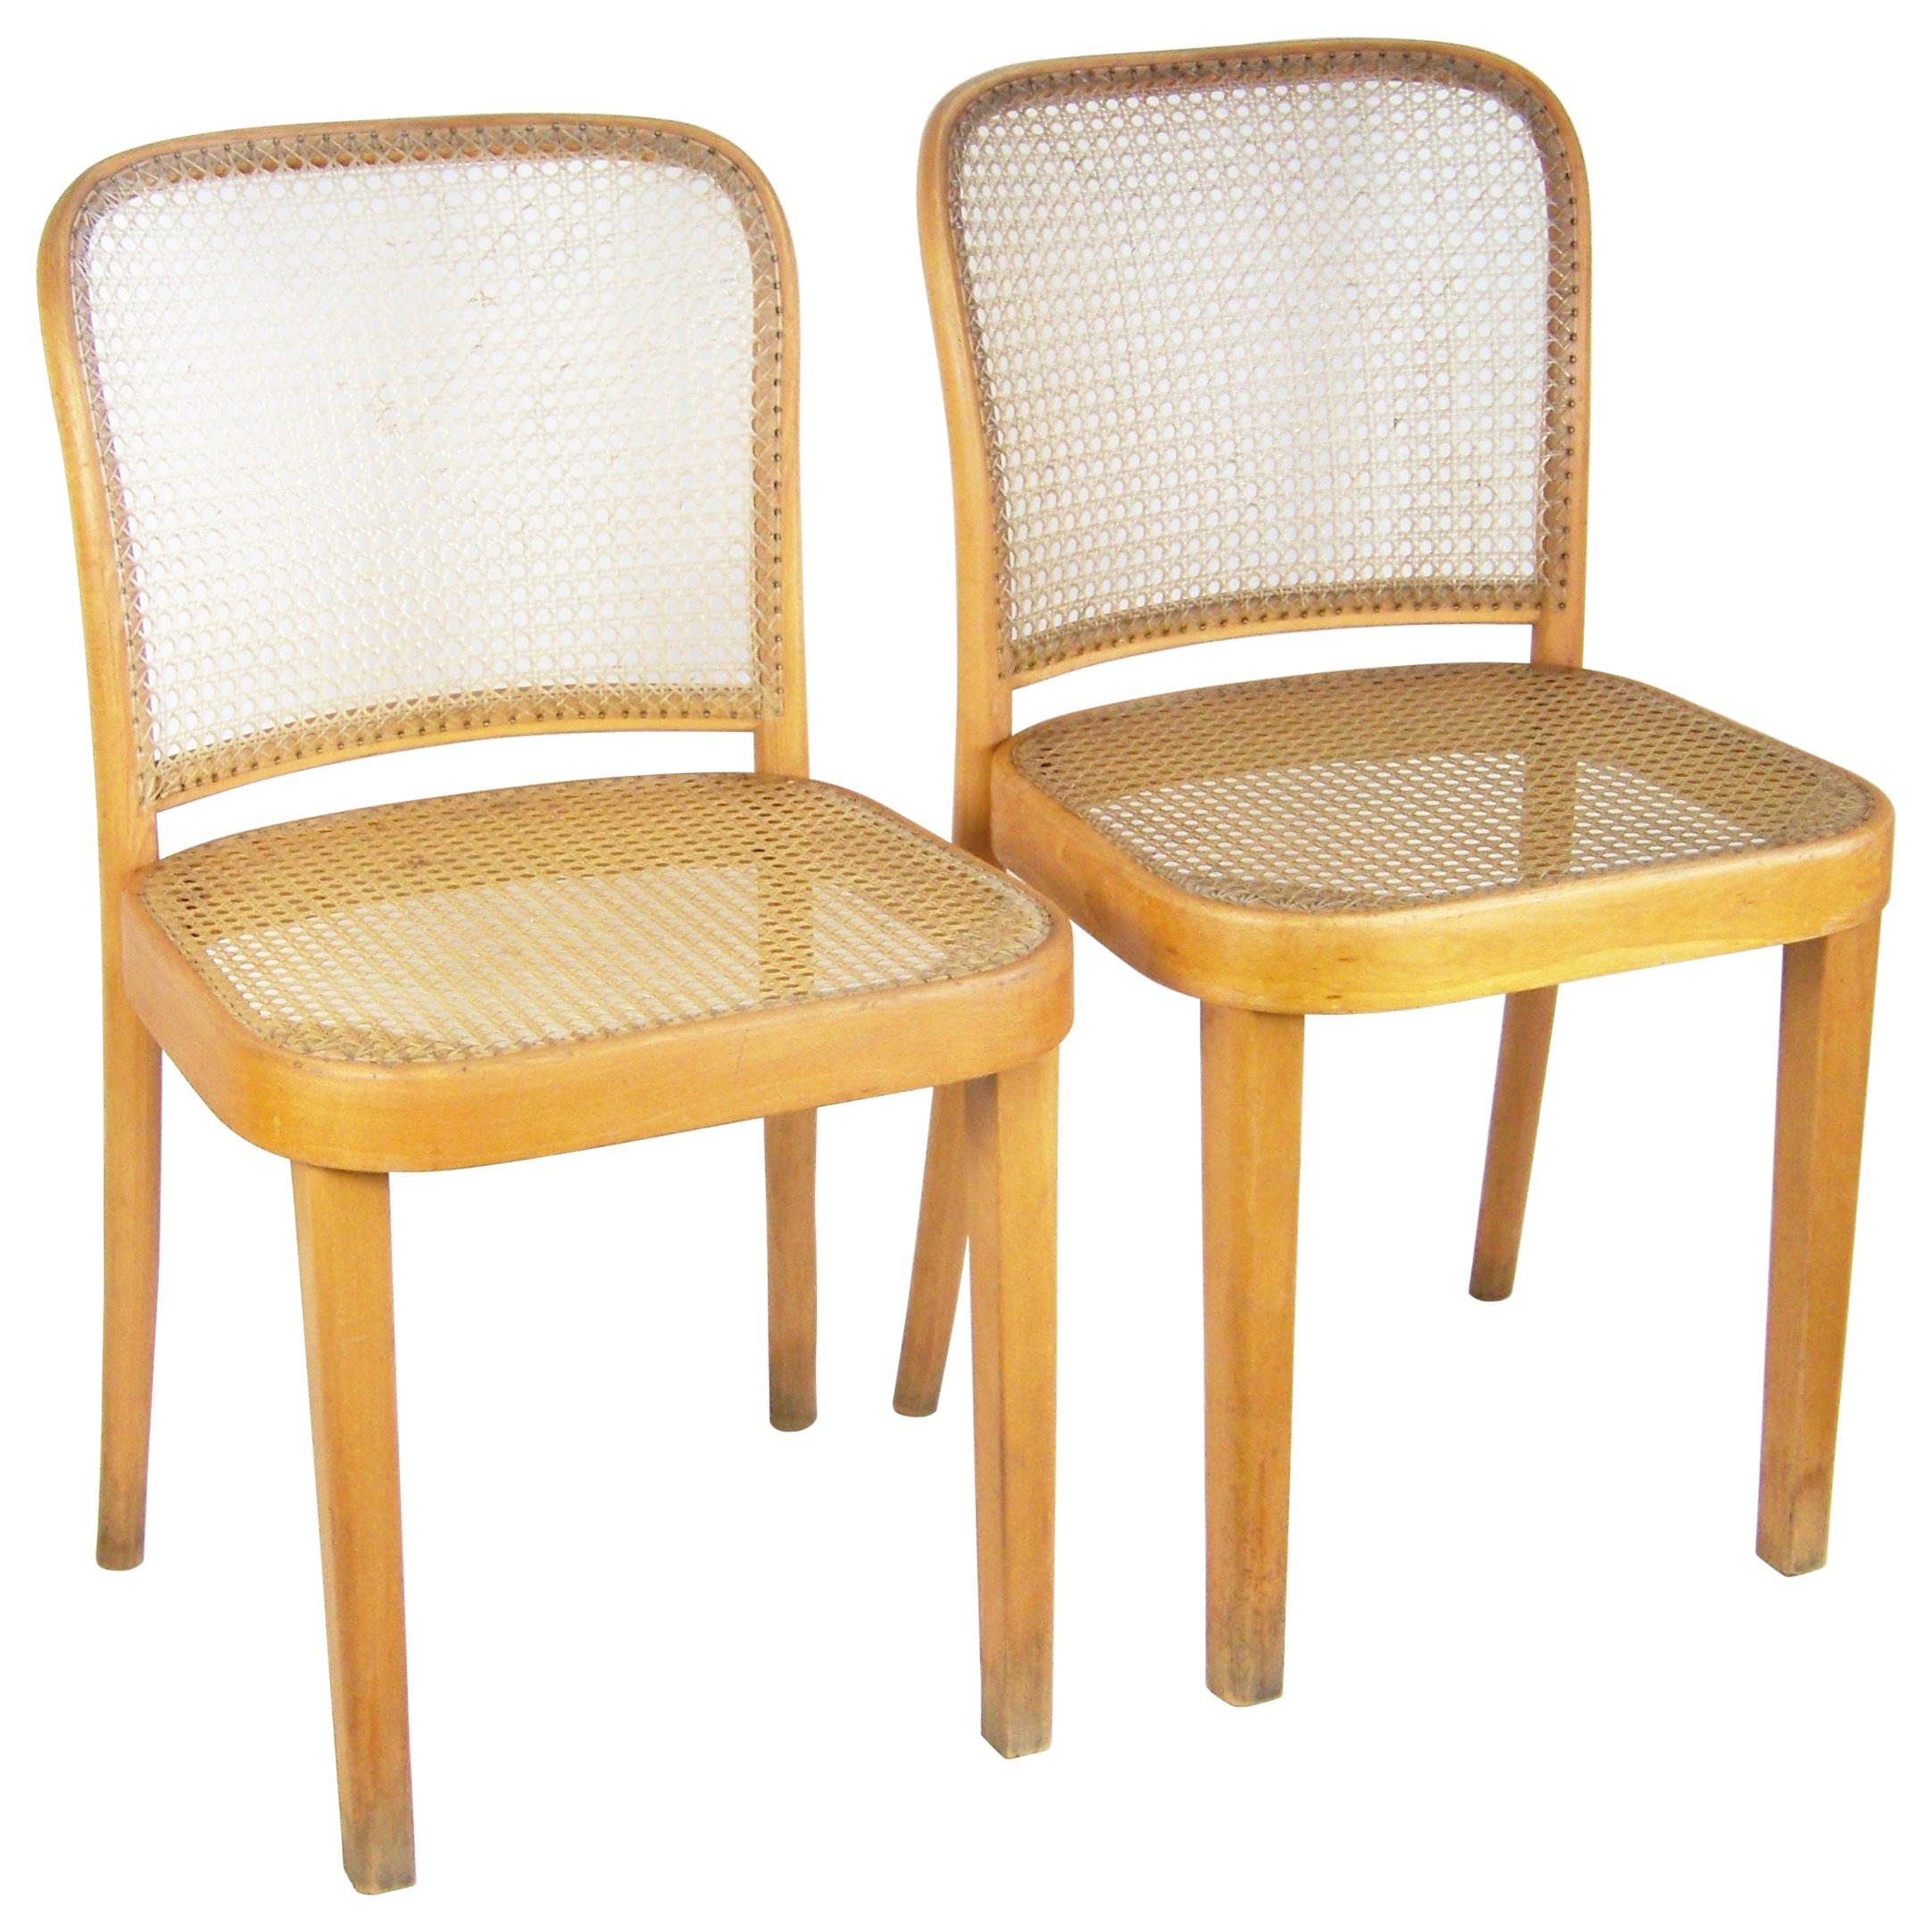 Two Chairs Thonet 811, Josef Hoffmann